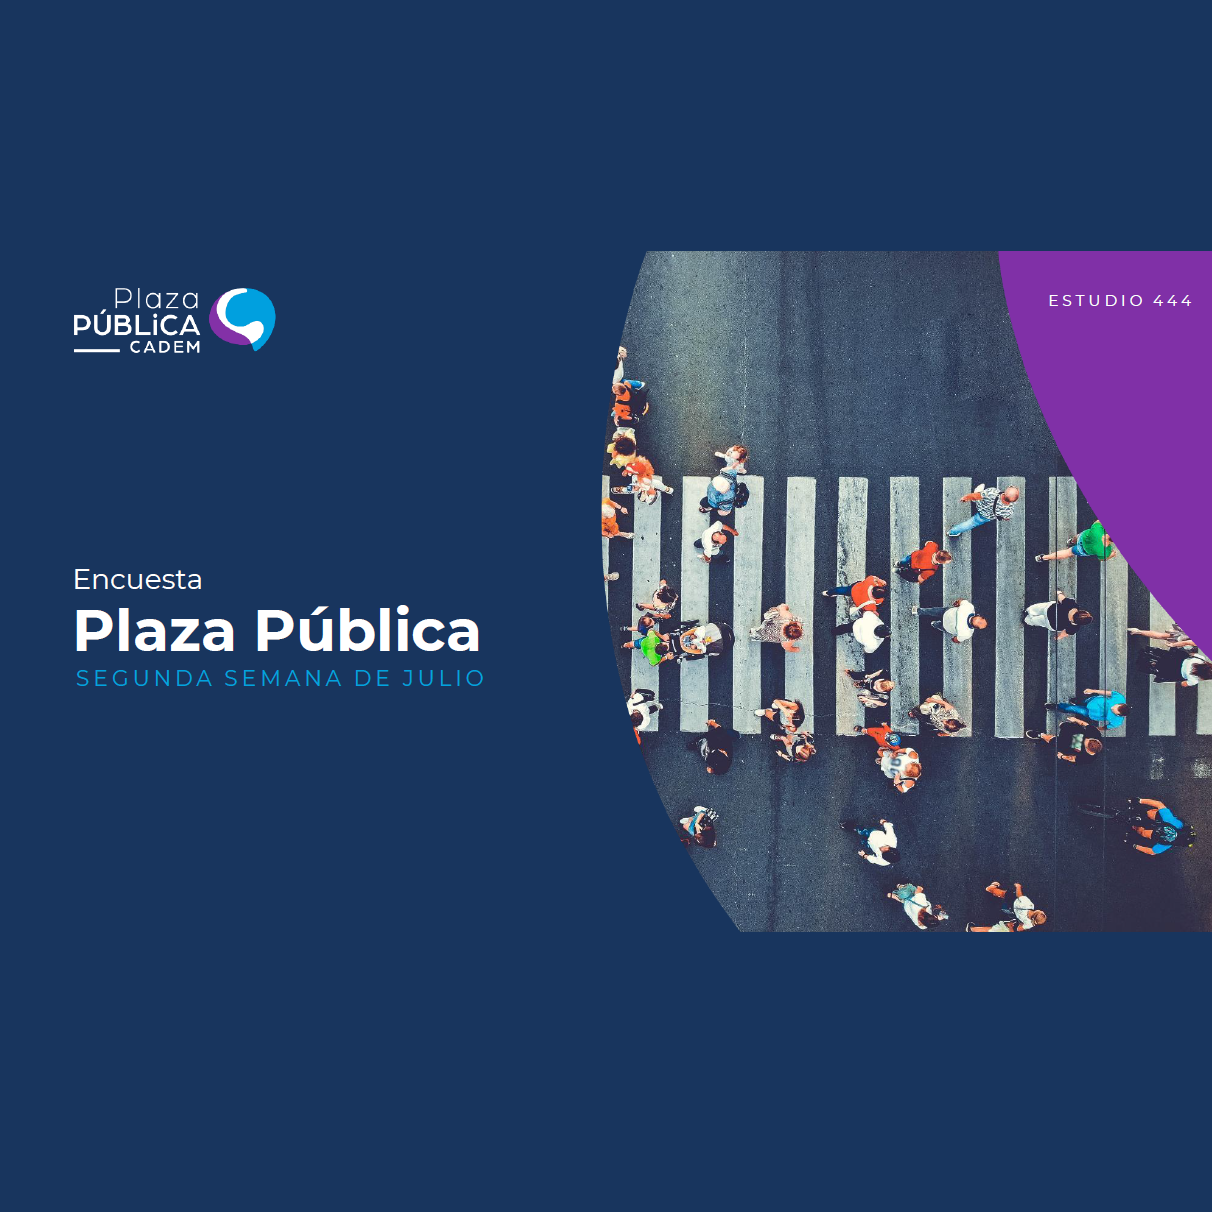 Estudio: Plaza pública Cadem – Segunda semana de julio